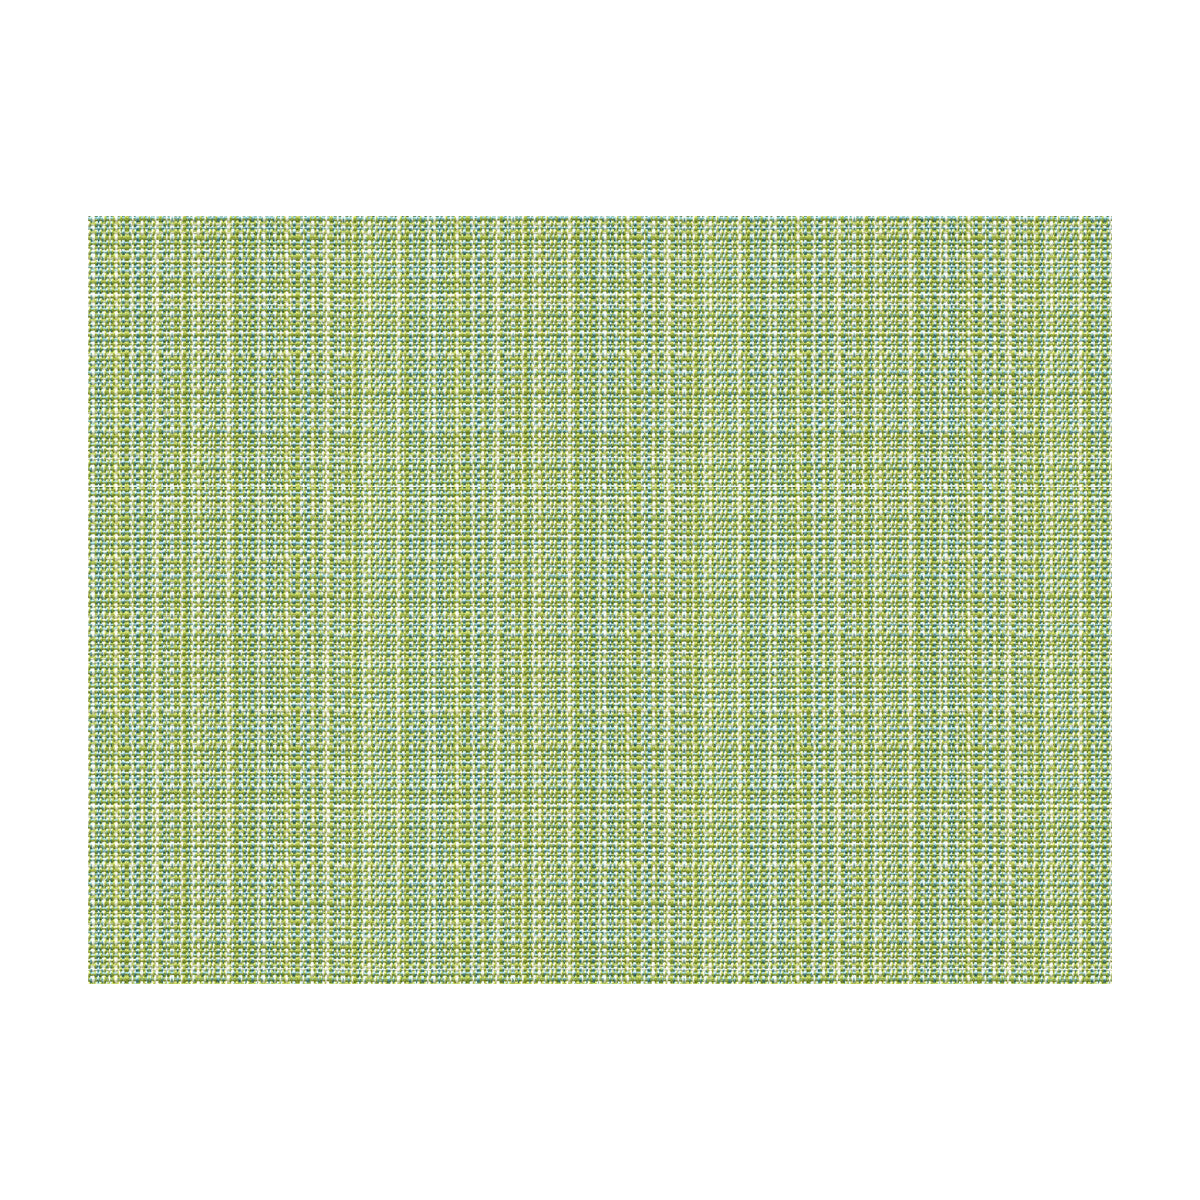 Kravet Smart fabric in 33340-315 color - pattern 33340.315.0 - by Kravet Smart in the Soleil collection